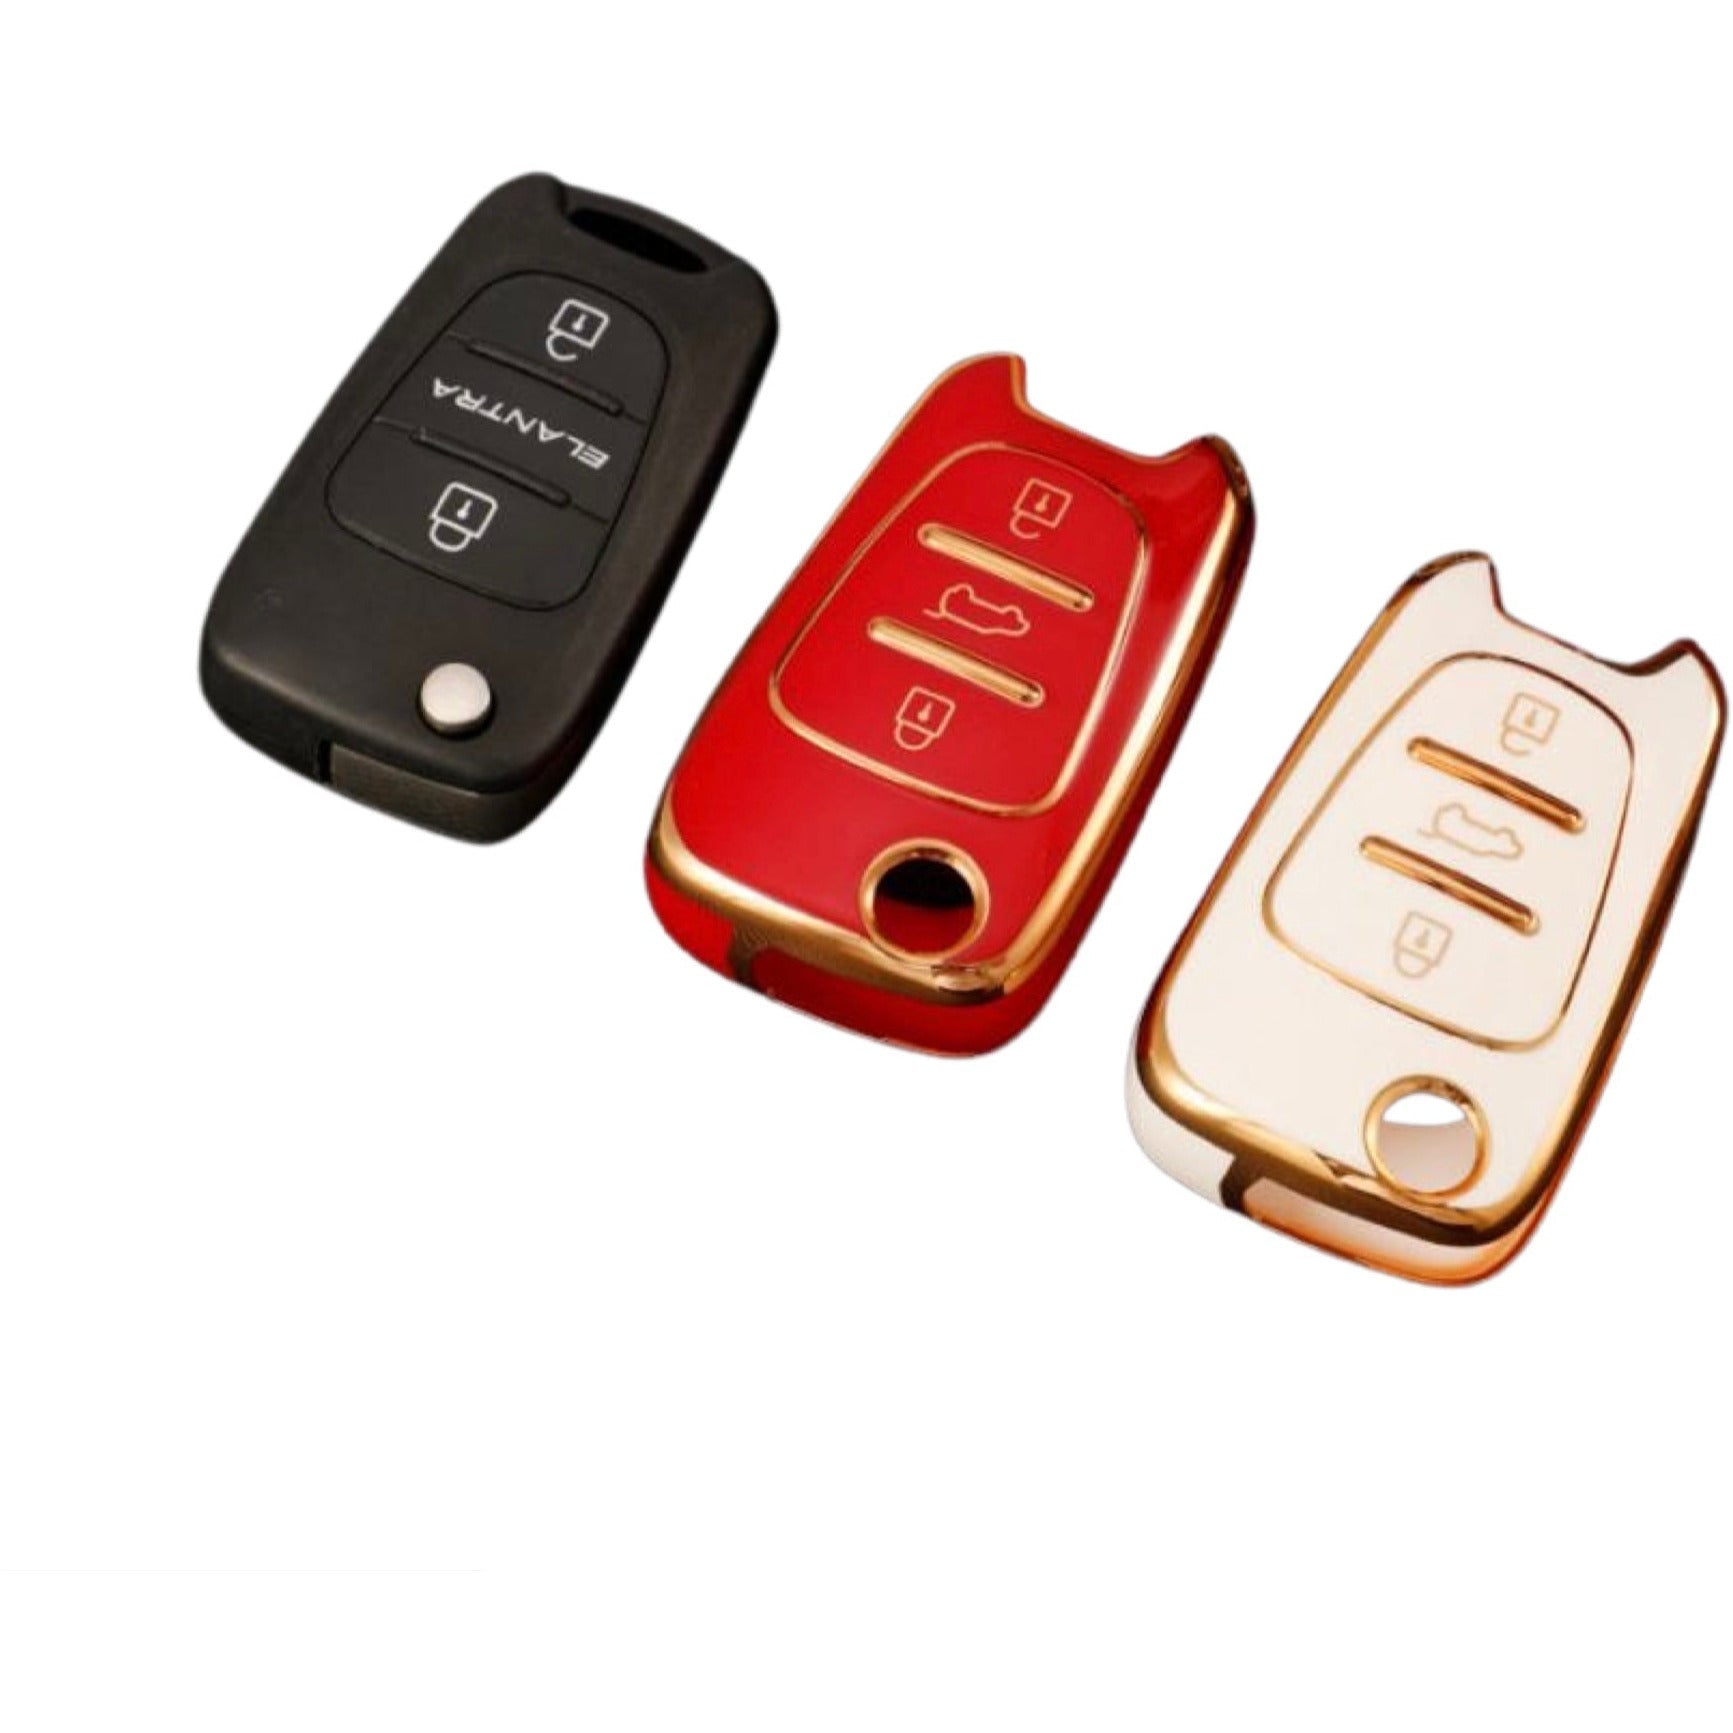 Hyundai key cover | i20, i30, Elantra, Accent, ix20, ix35 | Hyundai accessories - Keysleeves